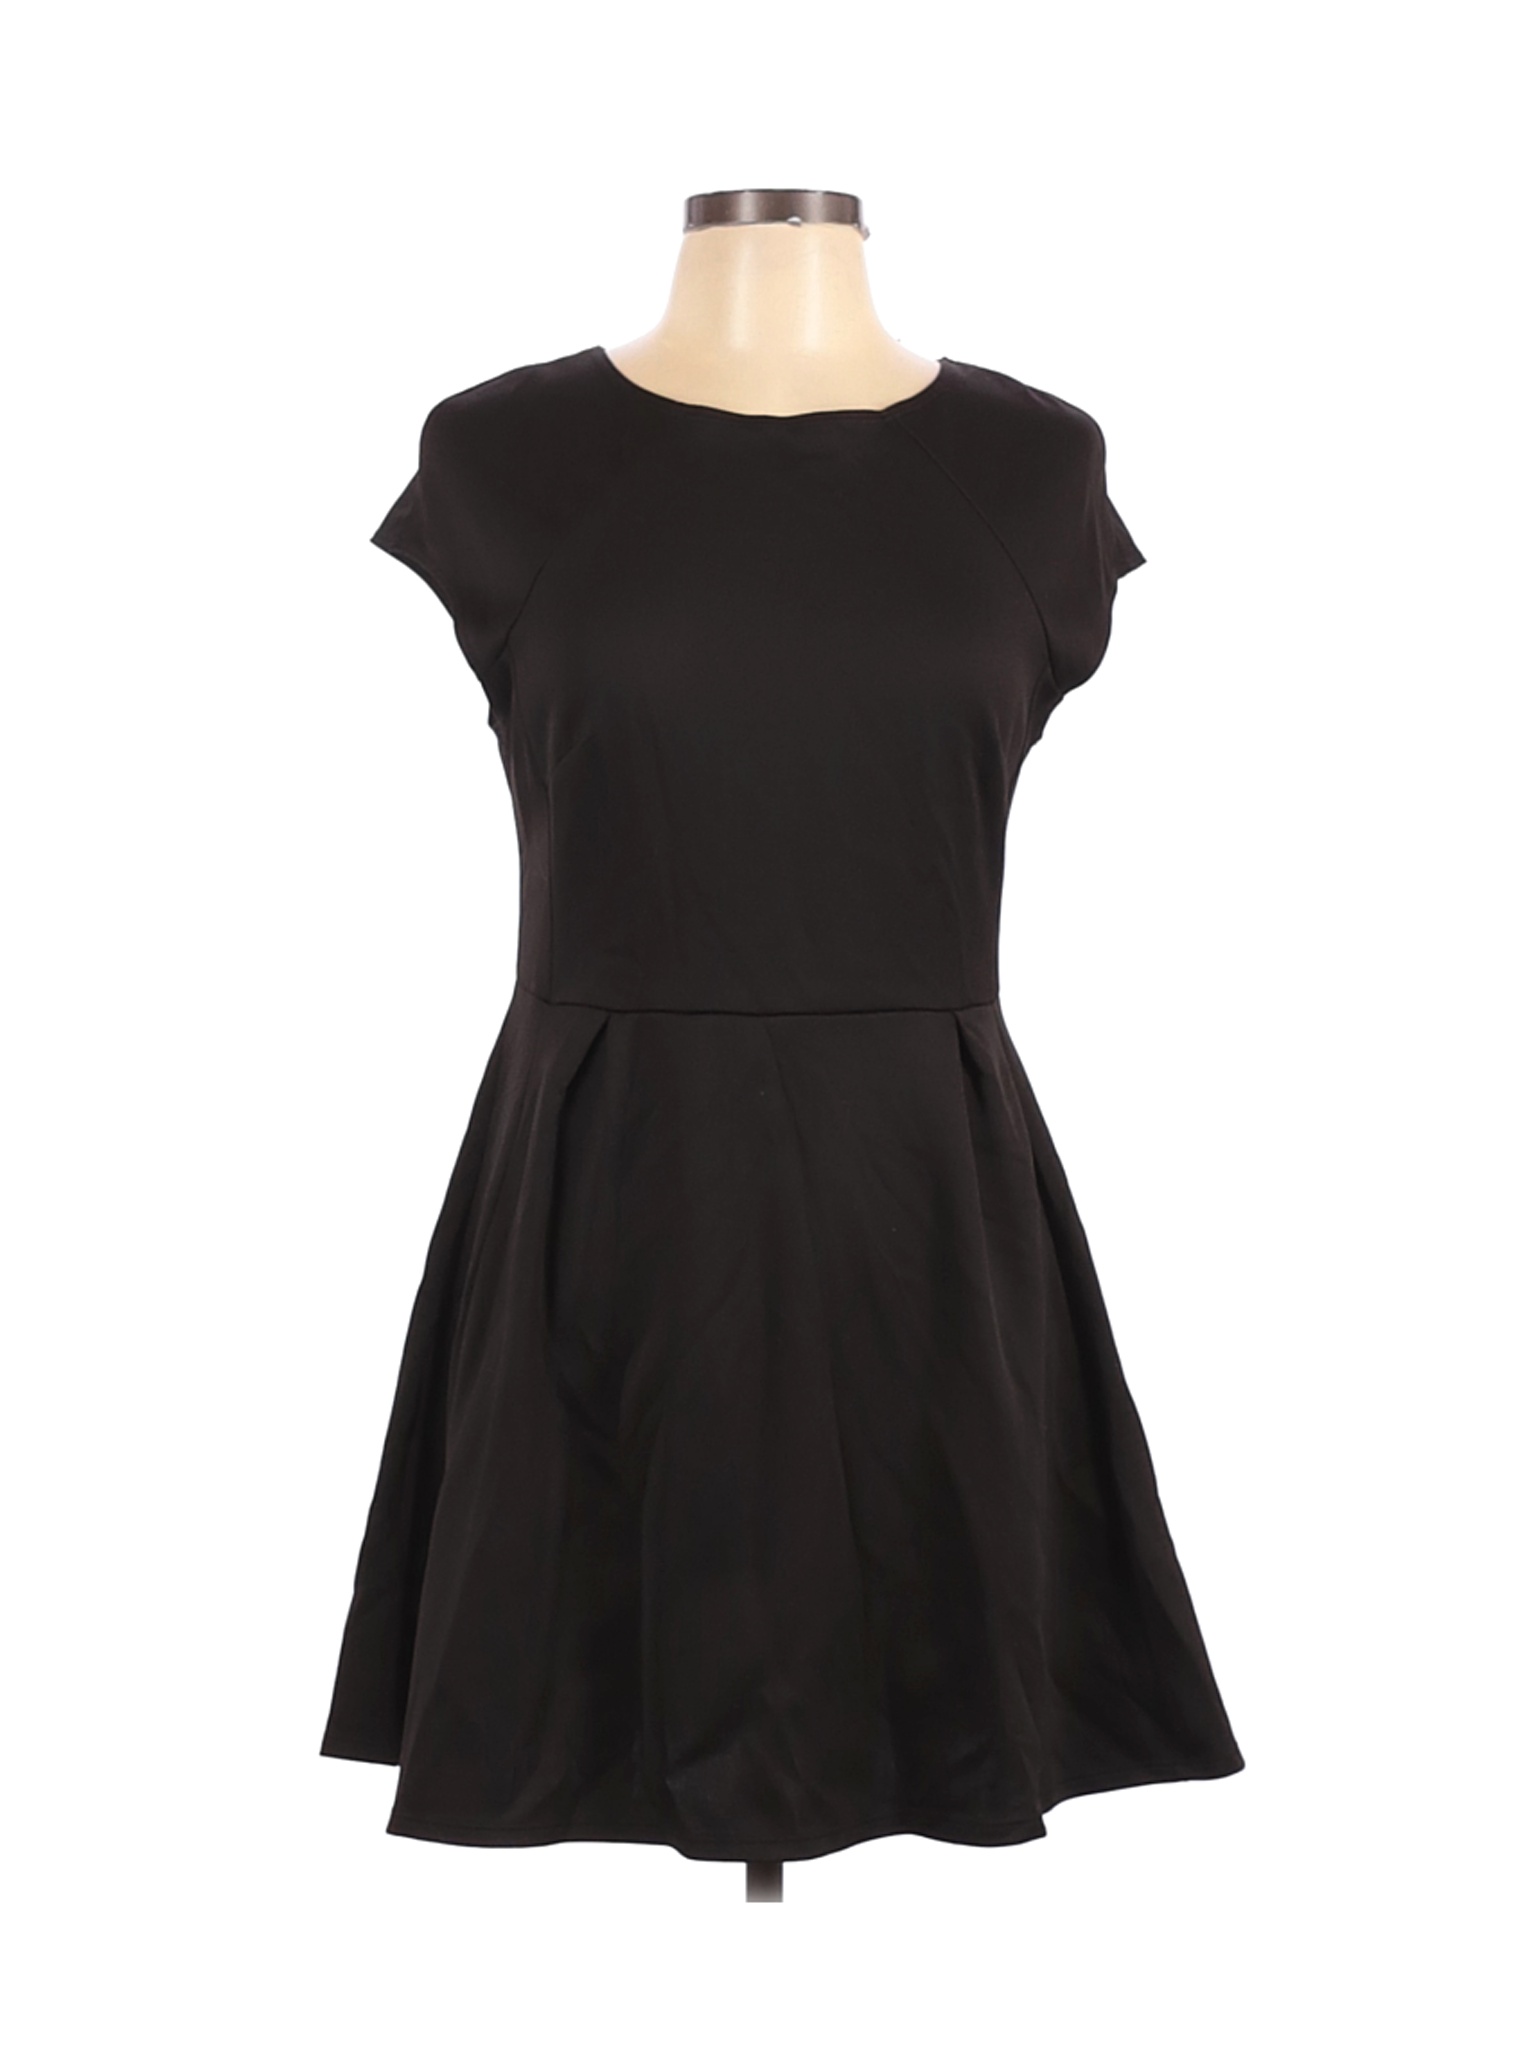 Romeo & Juliet Couture Women Black Casual Dress L | eBay